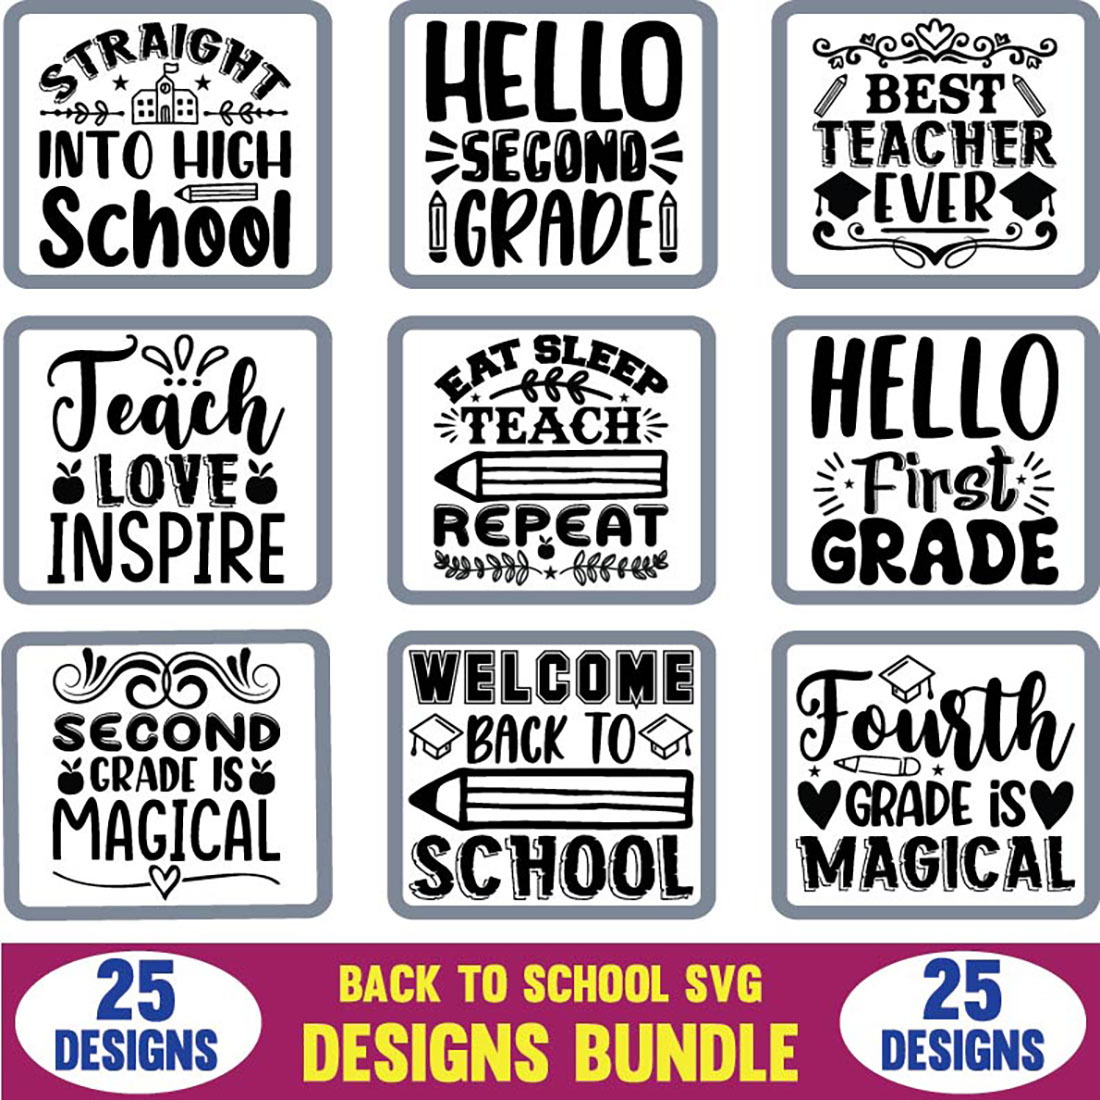 Back To School SVG Designs Bundle main cover